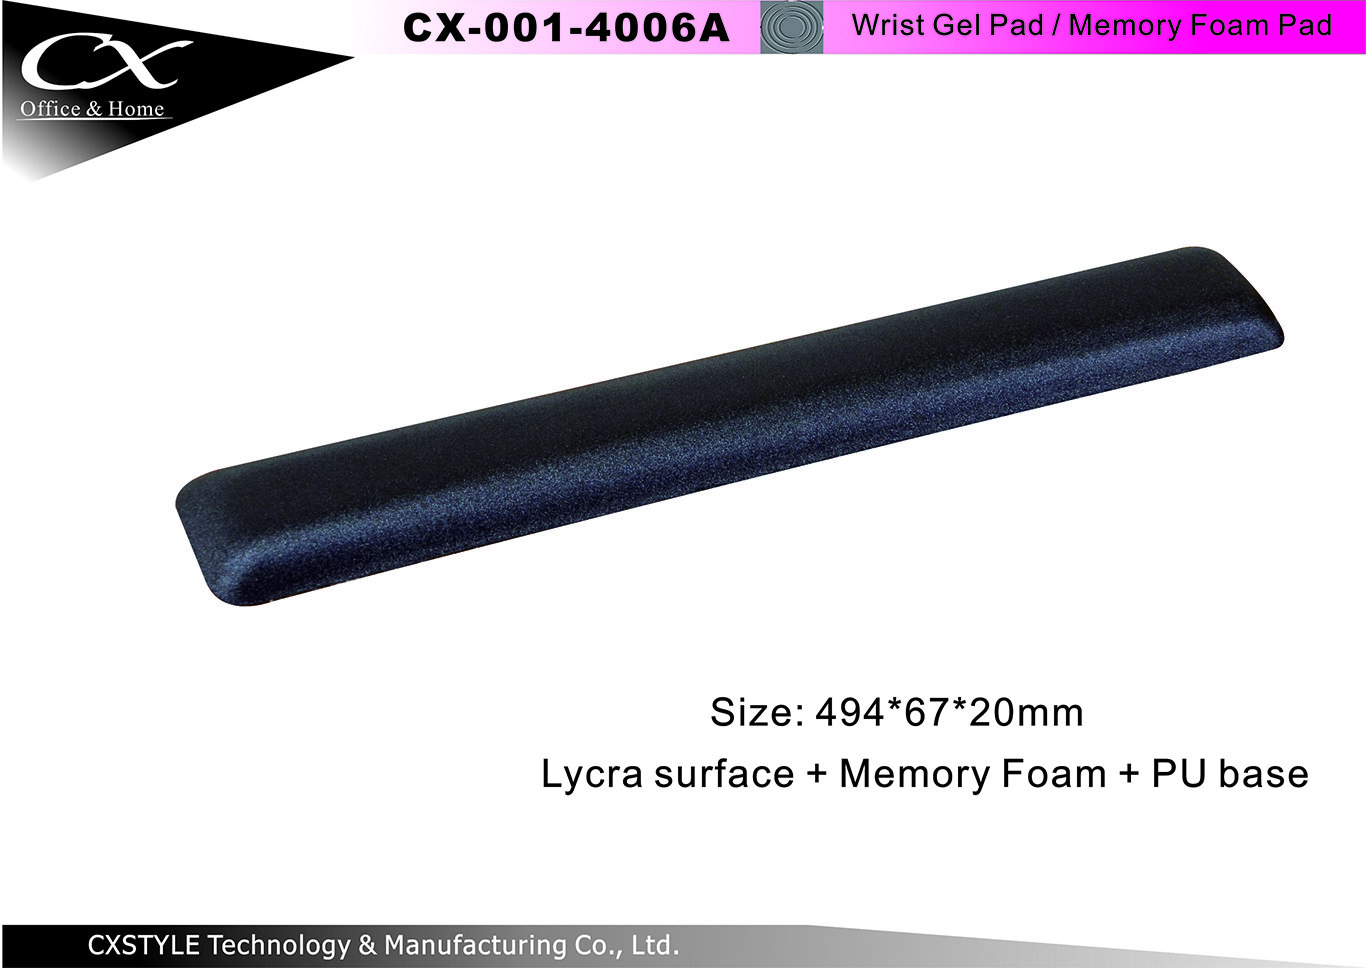 Keyboard GEL pad, Lycra Memory Foam pad, PU GEL pad Taiwan 4006A